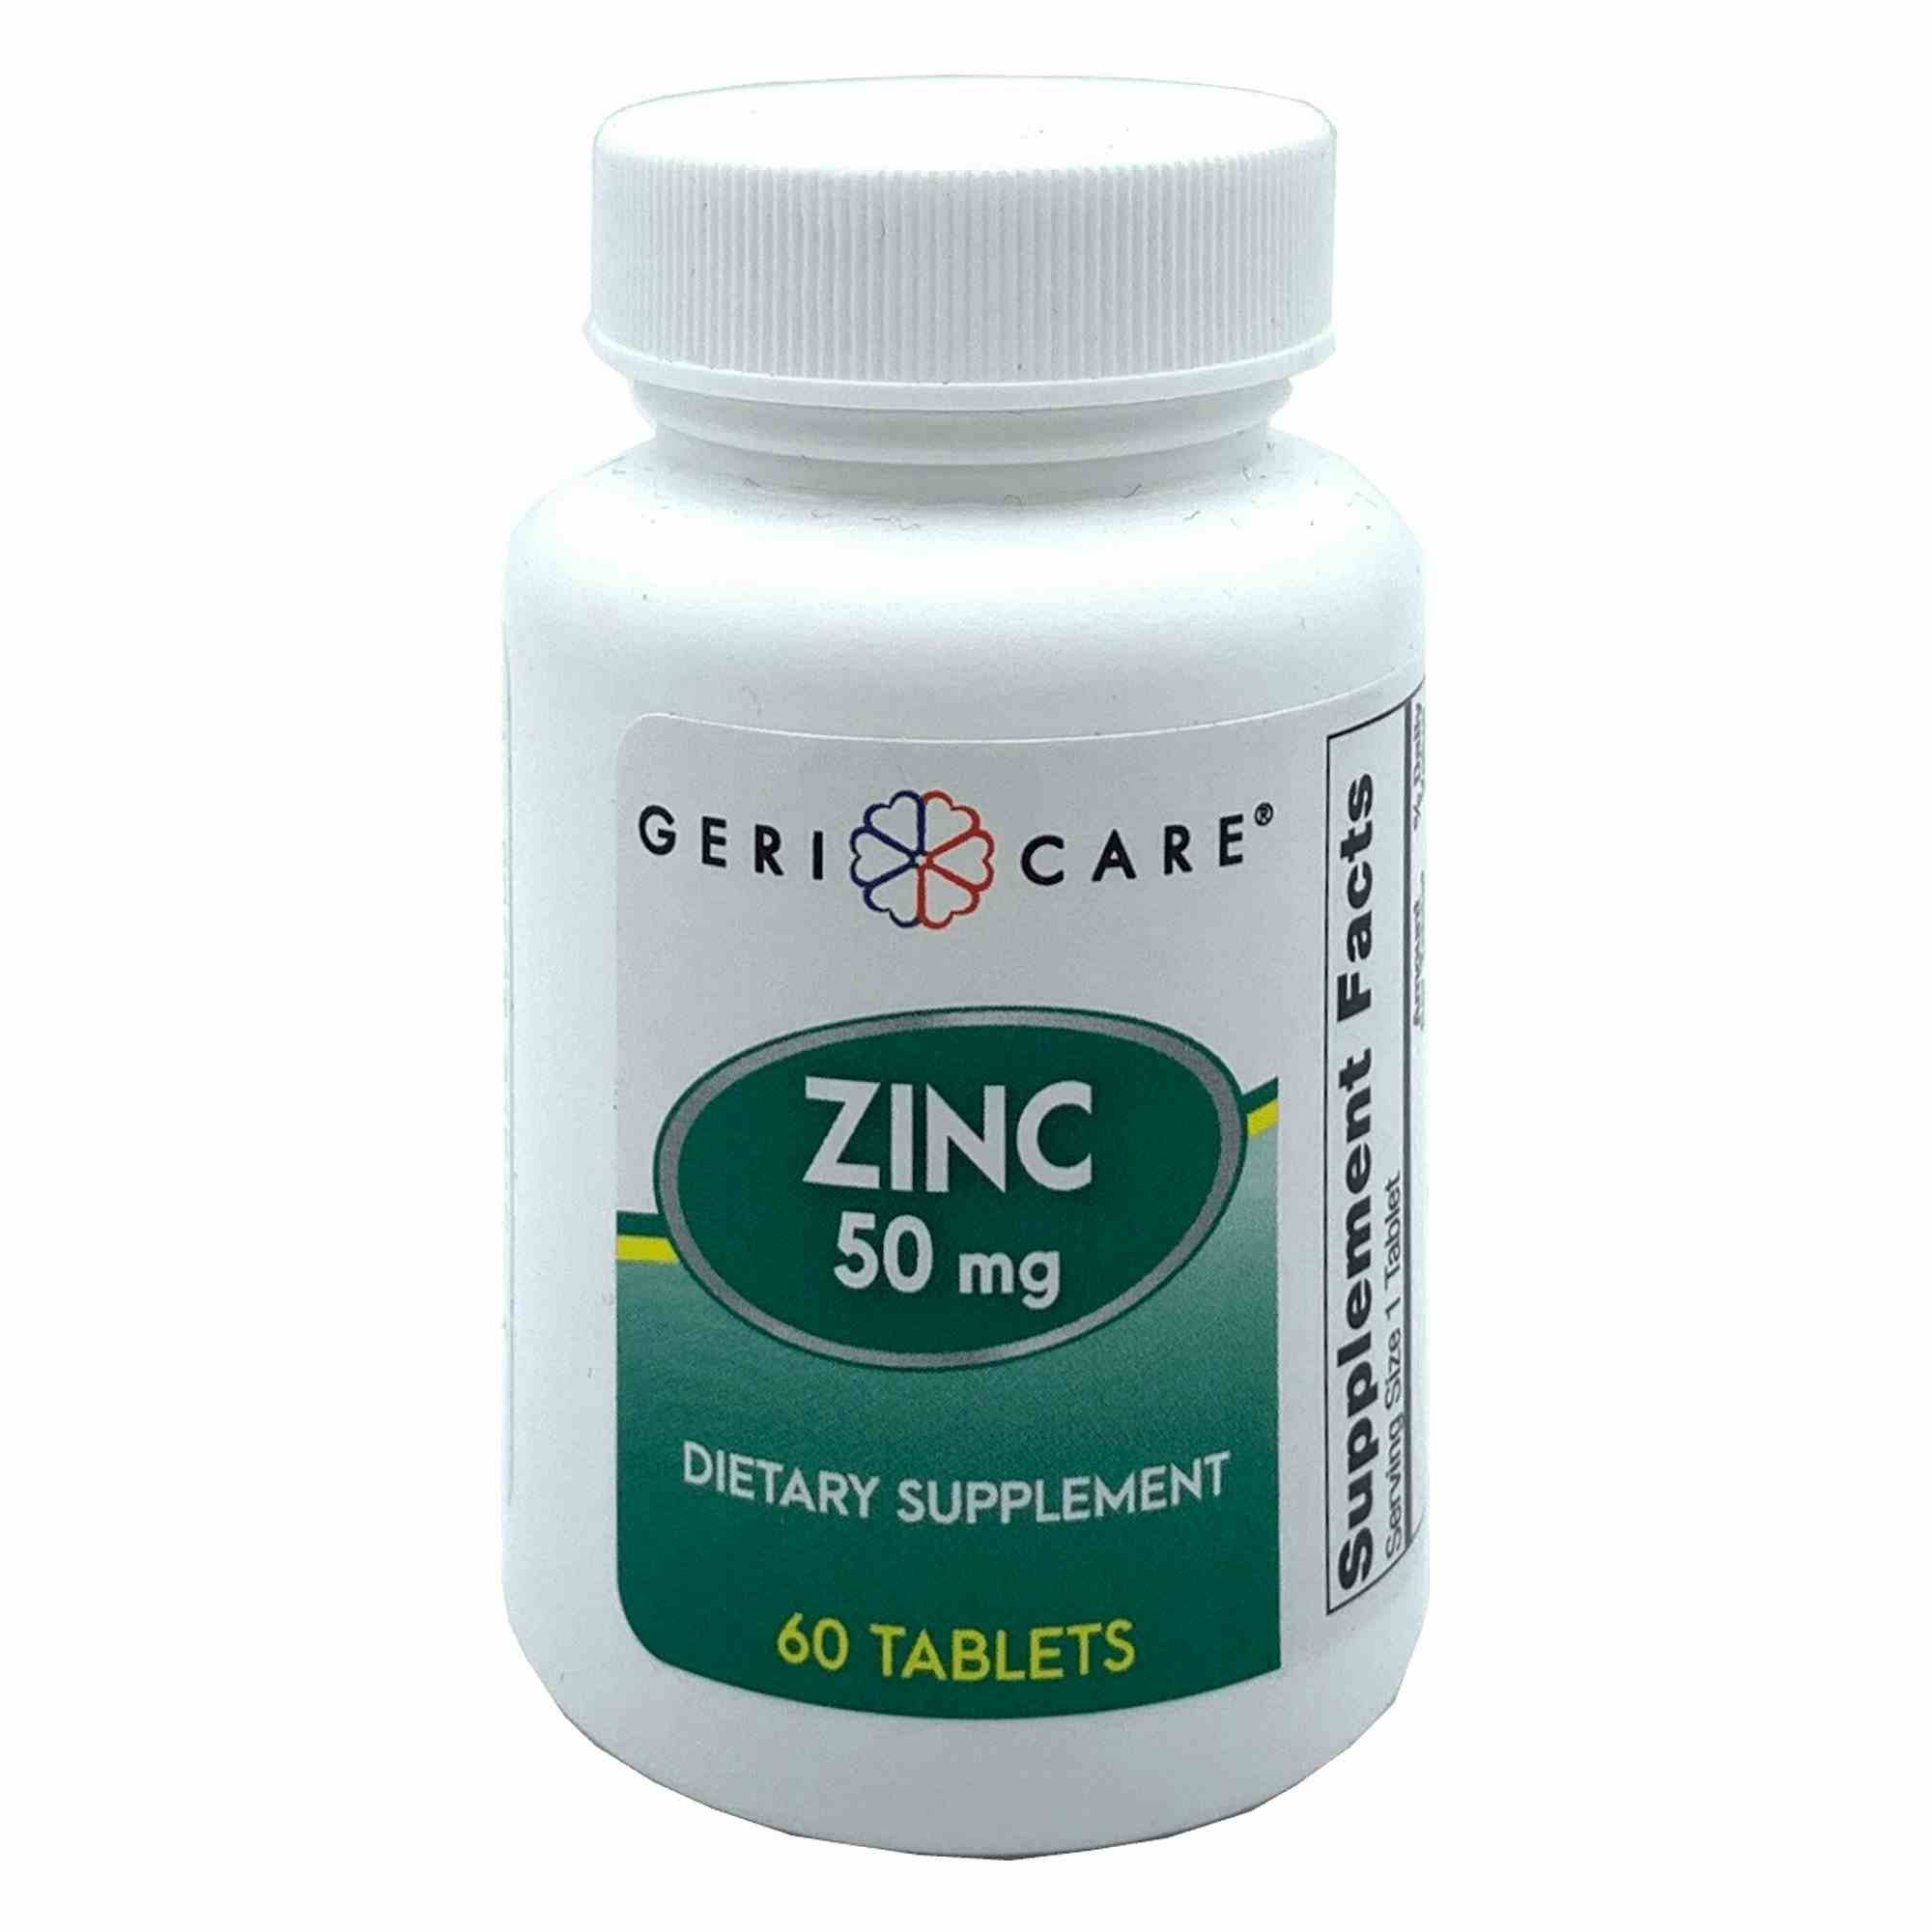 Geri-Care Zinc Dietary Supplement, 50 mg, 60 Tablets, 865-06, 1 Bottle